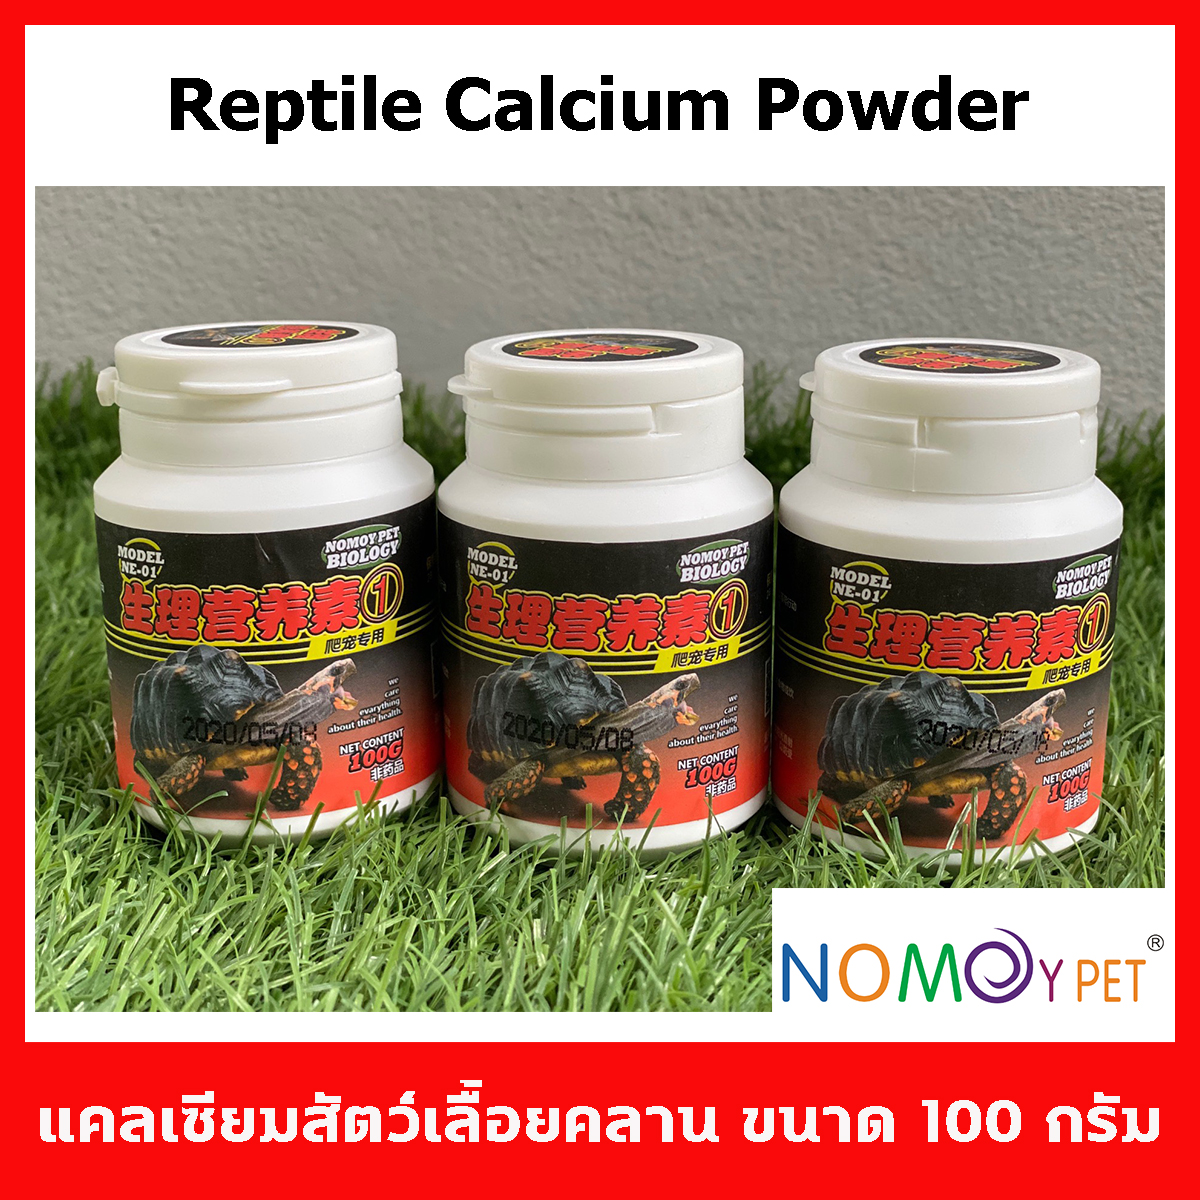 Nomoy Pet Calcium Powder 100 g แคลเซียมสำหรับสัตว์เลื้อยคลานทุกชนิด ขนาด 100 กรัม เป็นผงละเอียด ใช้คลุกหรือโรยในอาหารก่อนให้สัตว์เลี้ยงกิน